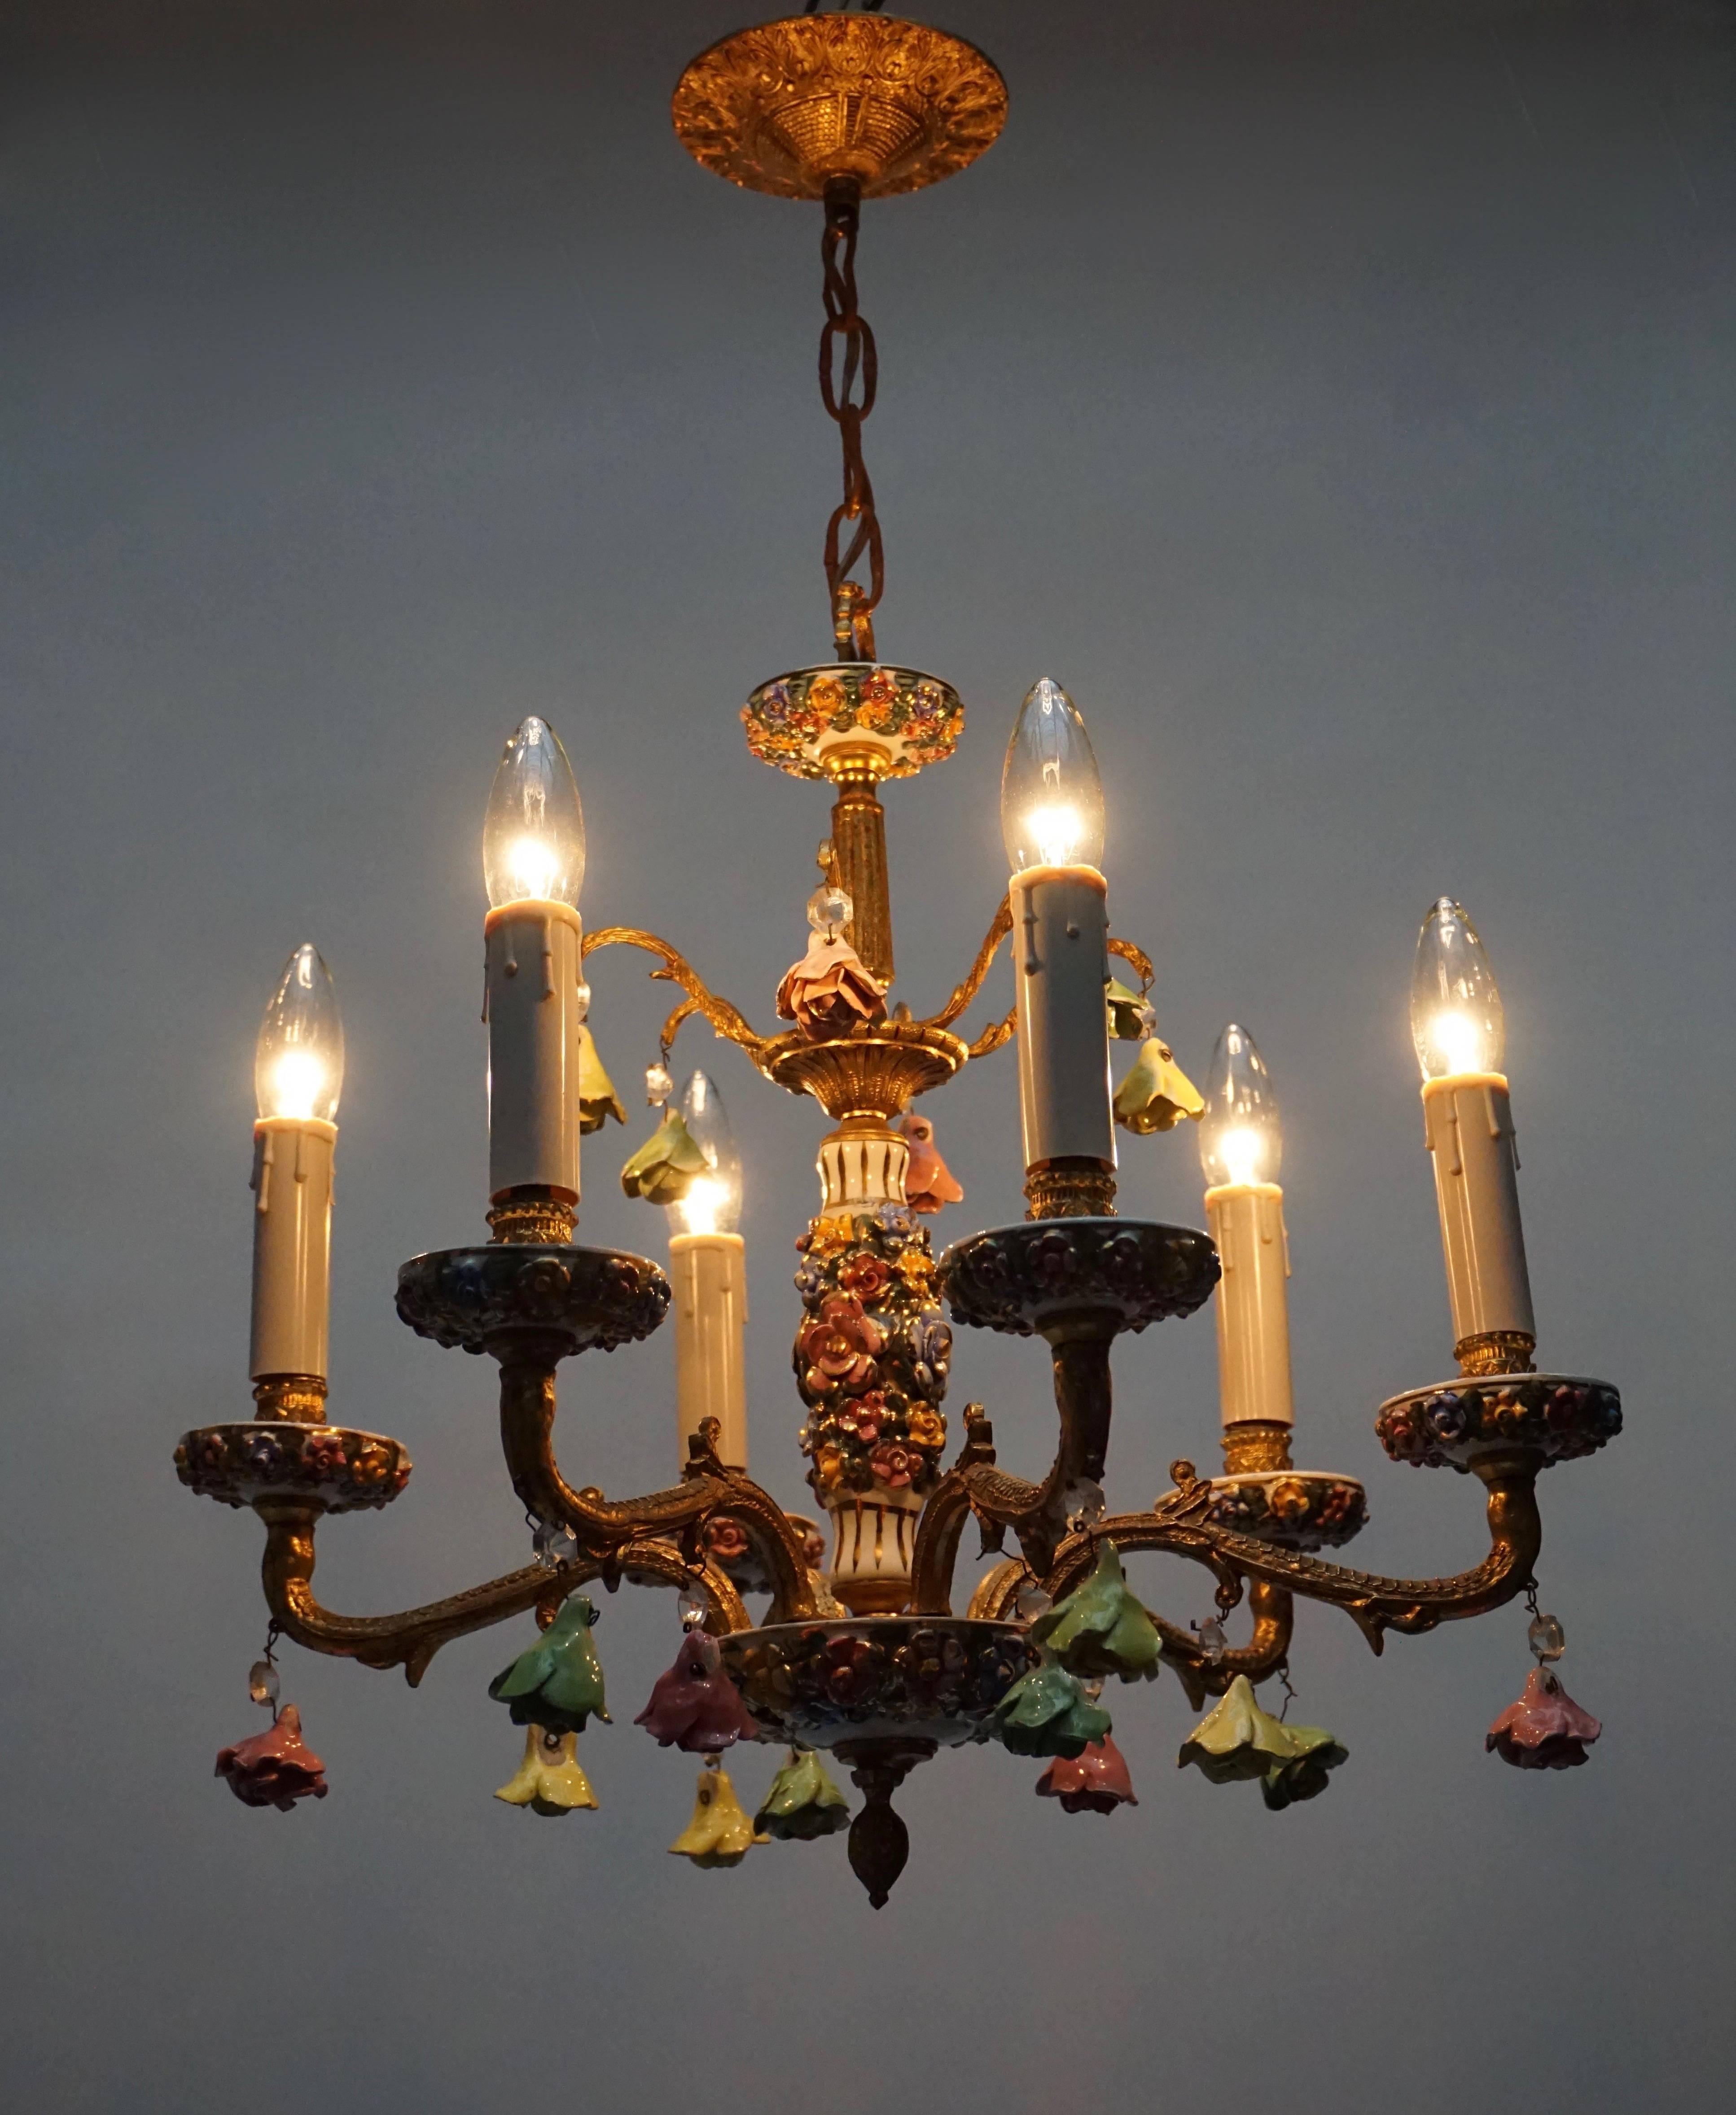 Brass chandelier with porcelain flowers.
Diameter 47 cm.
Height fixture 40 cm.
Total height 6 cm.
Six E14 bulbs.